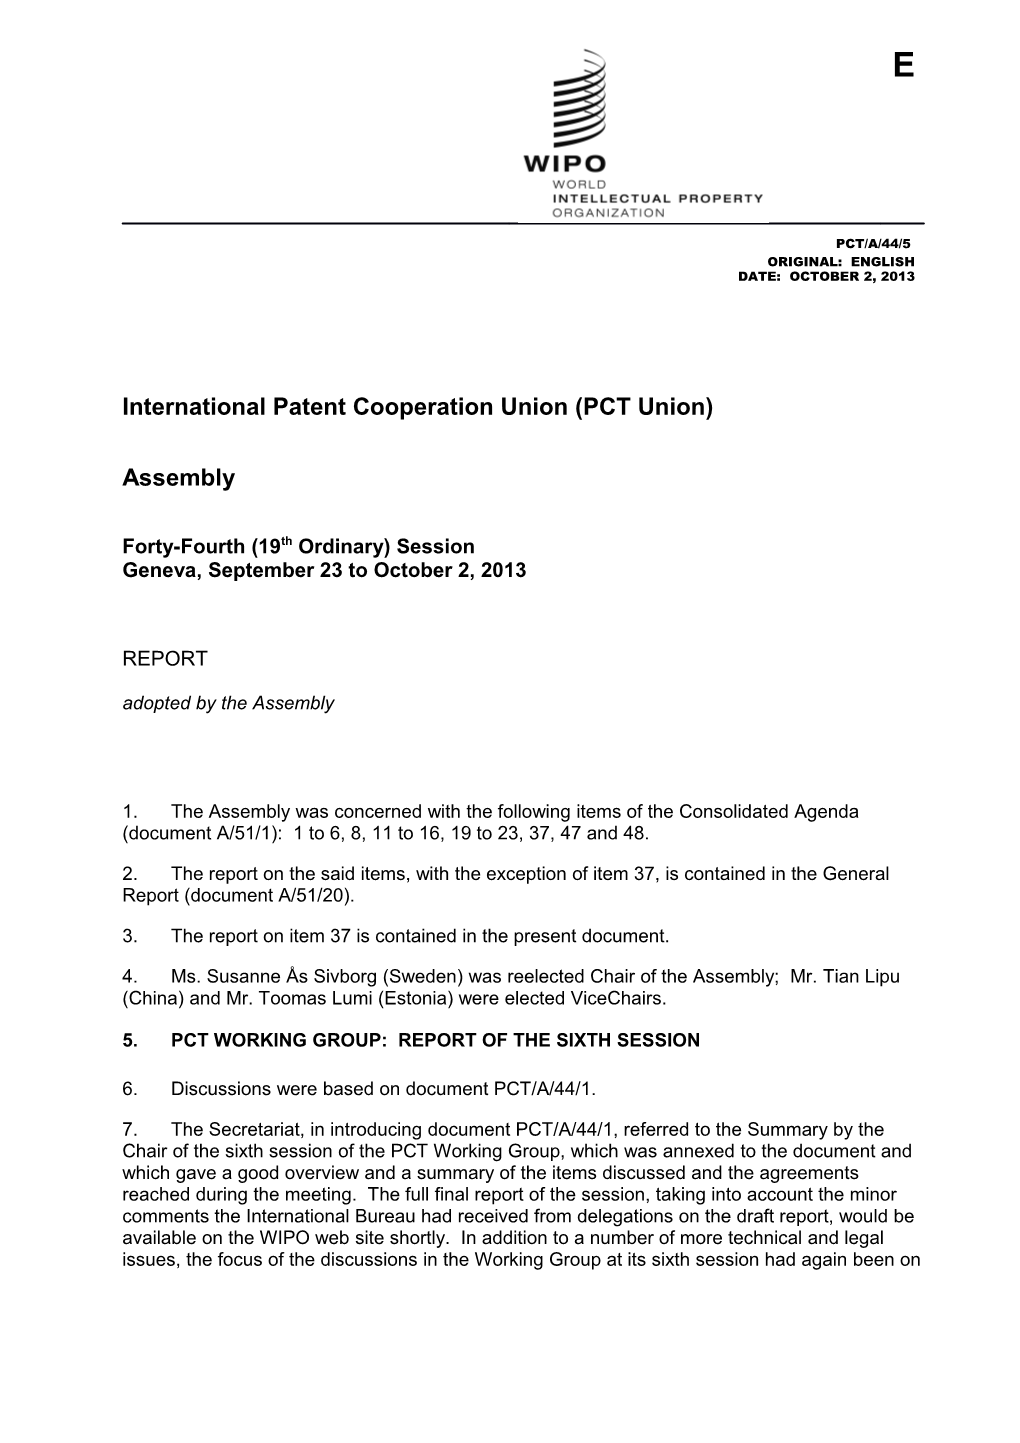 International Patent Cooperation Union (PCT Union) s4